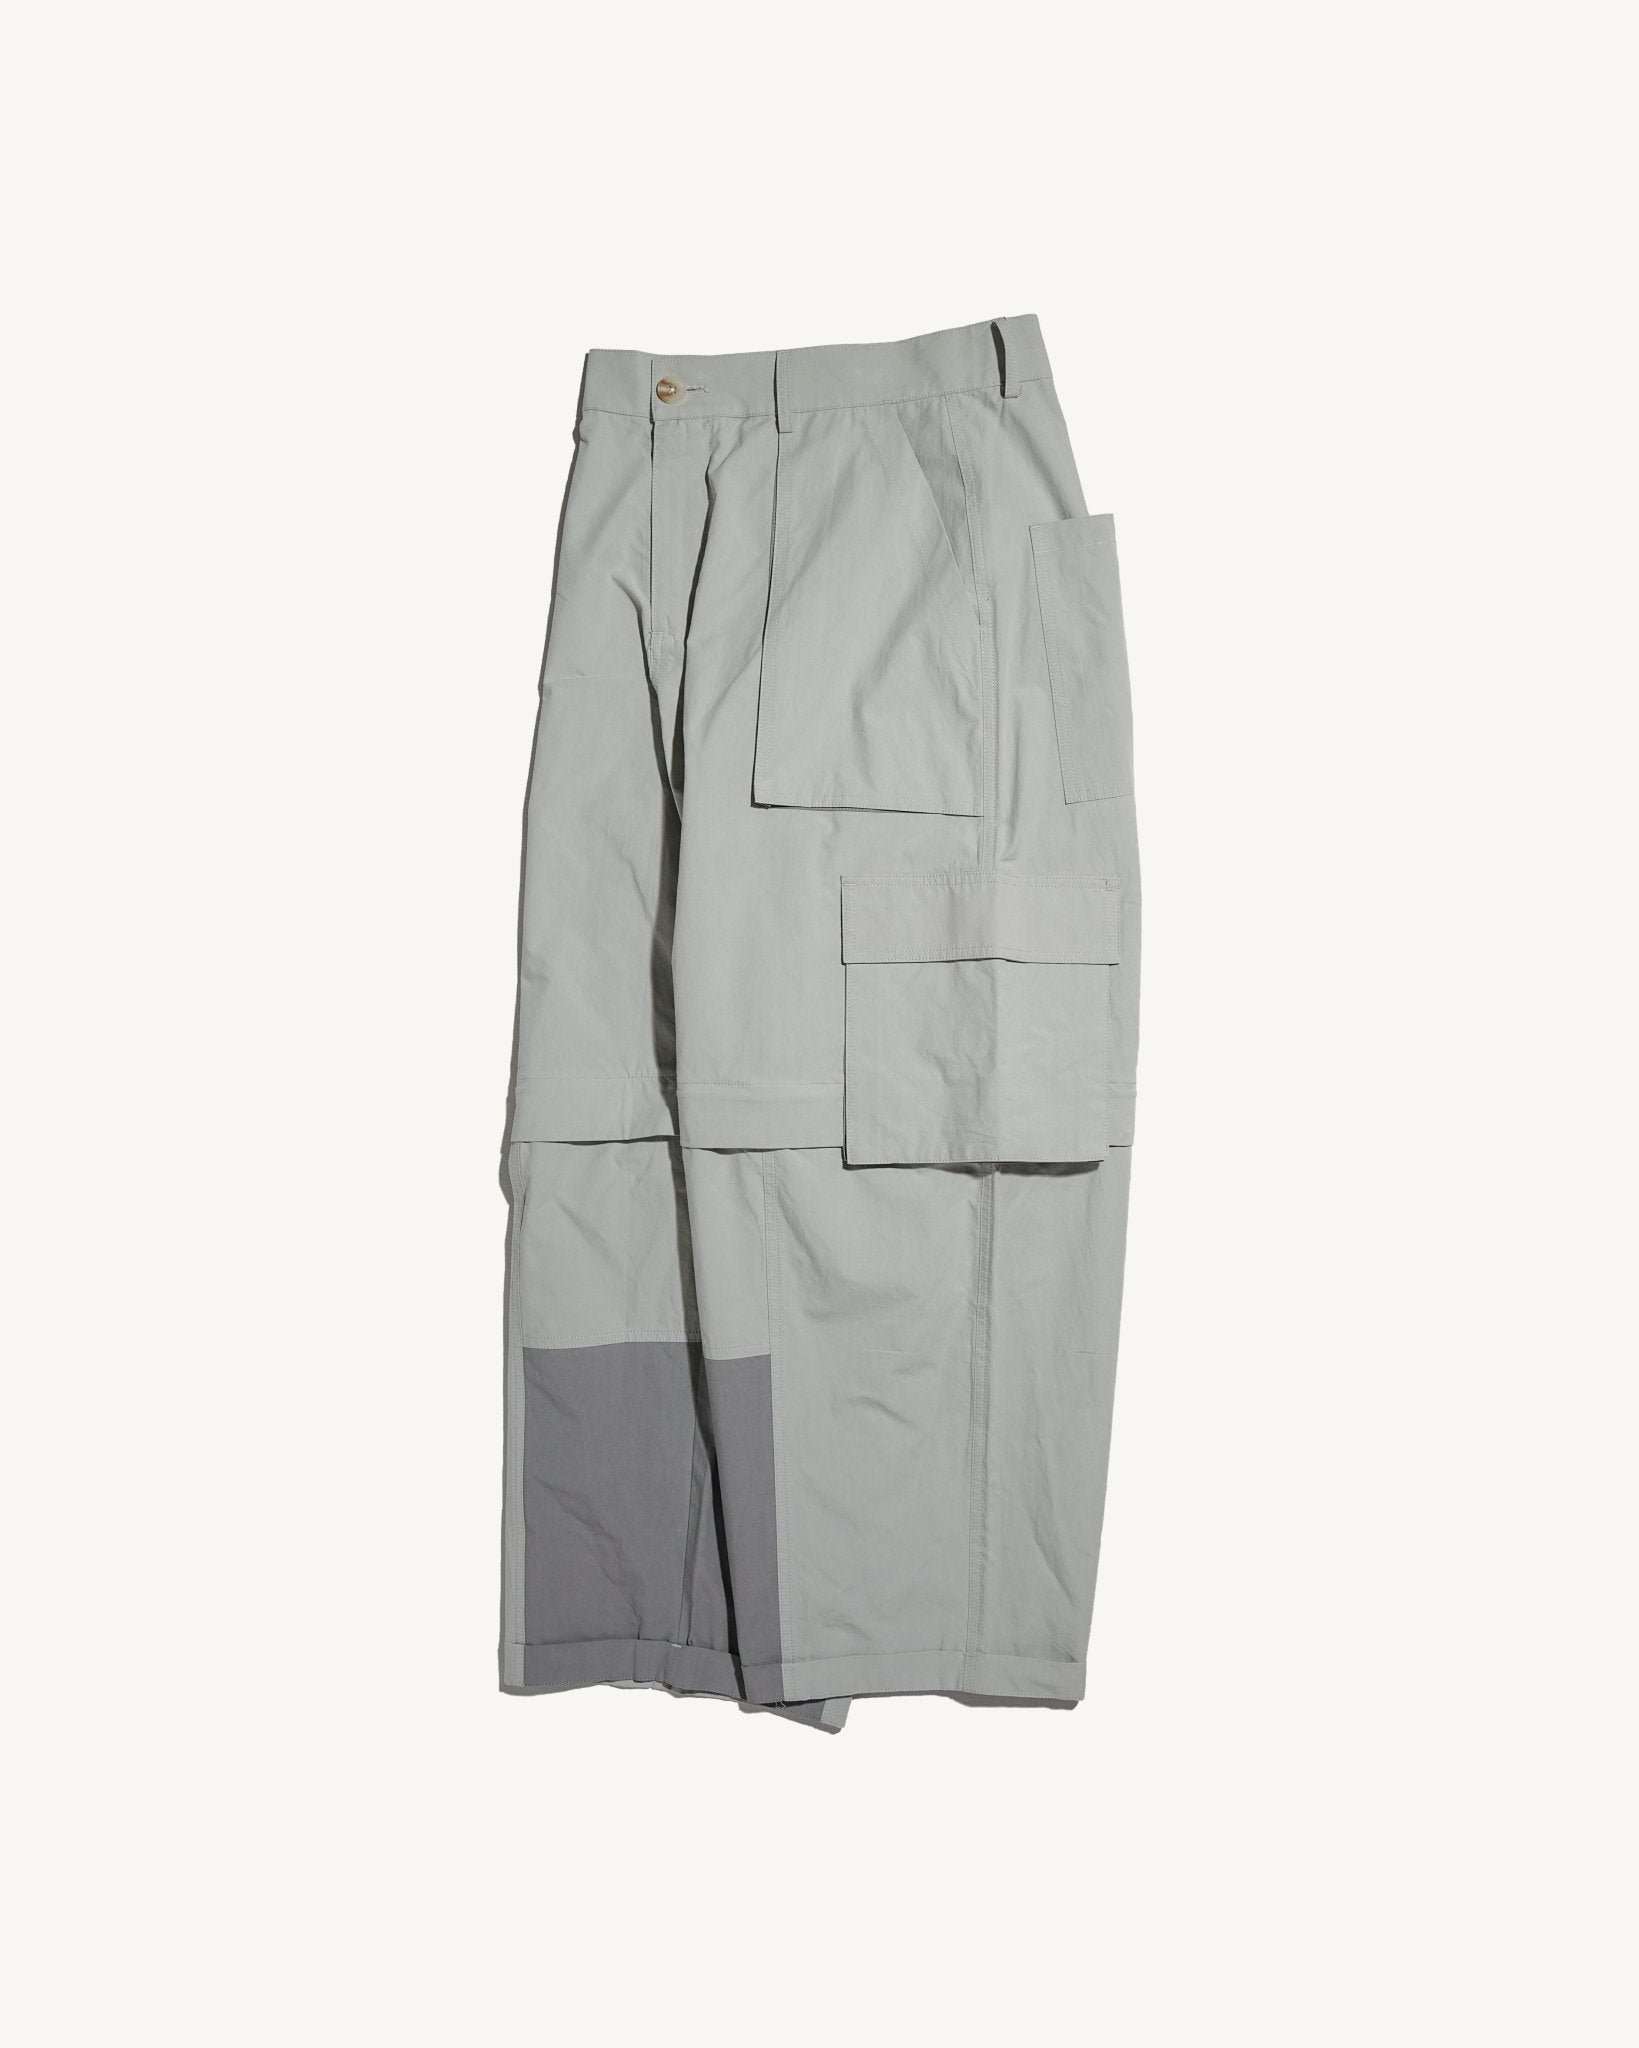 GRAYE Singapore Menswear Brand - Convertible Cargo Pants - Light Gray